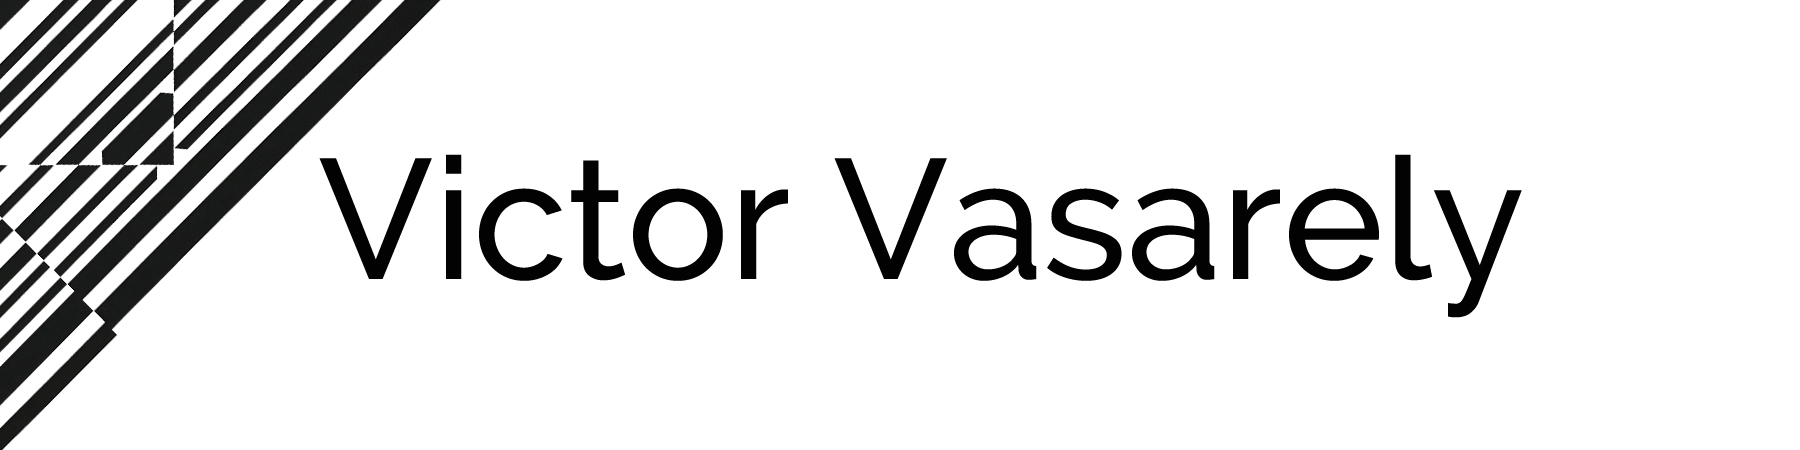 Victor Vasarely Prints